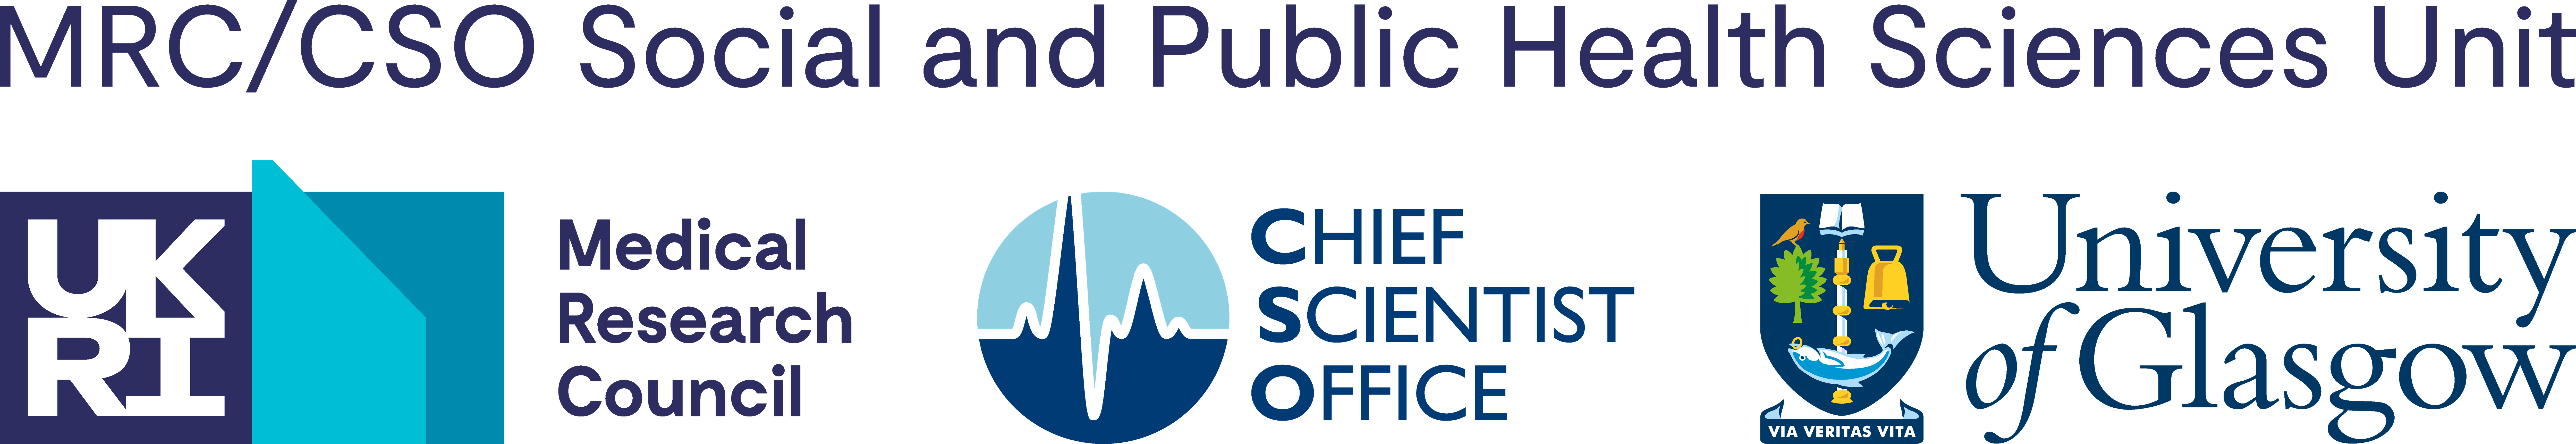 MRC/CSO Social and Public Health Sciences Unit, University of Glasgow